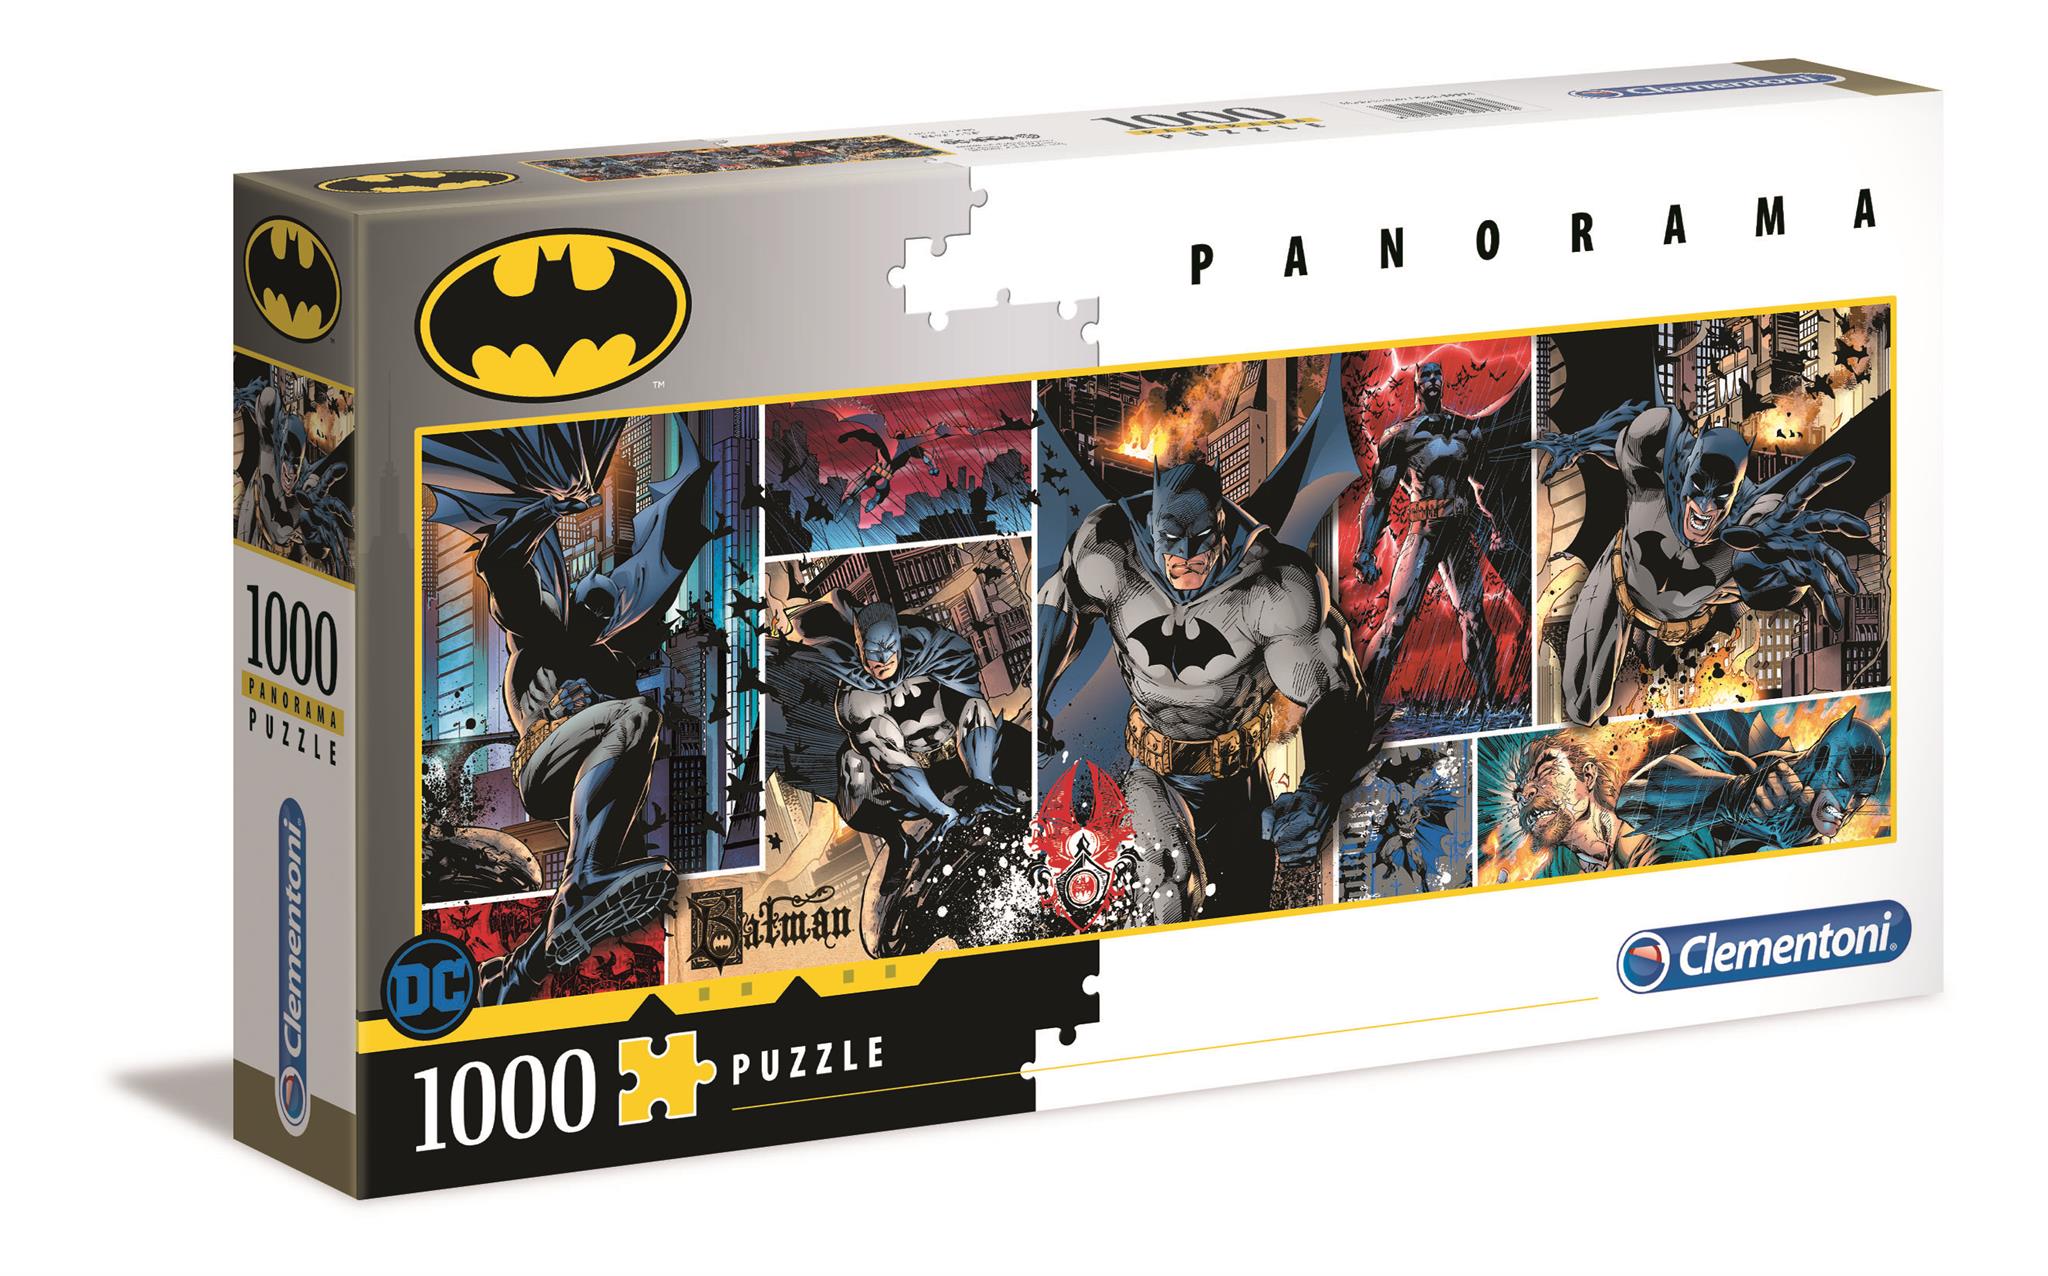 Clementoni - Panorama Puzzle 1000 pcs - Batman 2020 (39574)